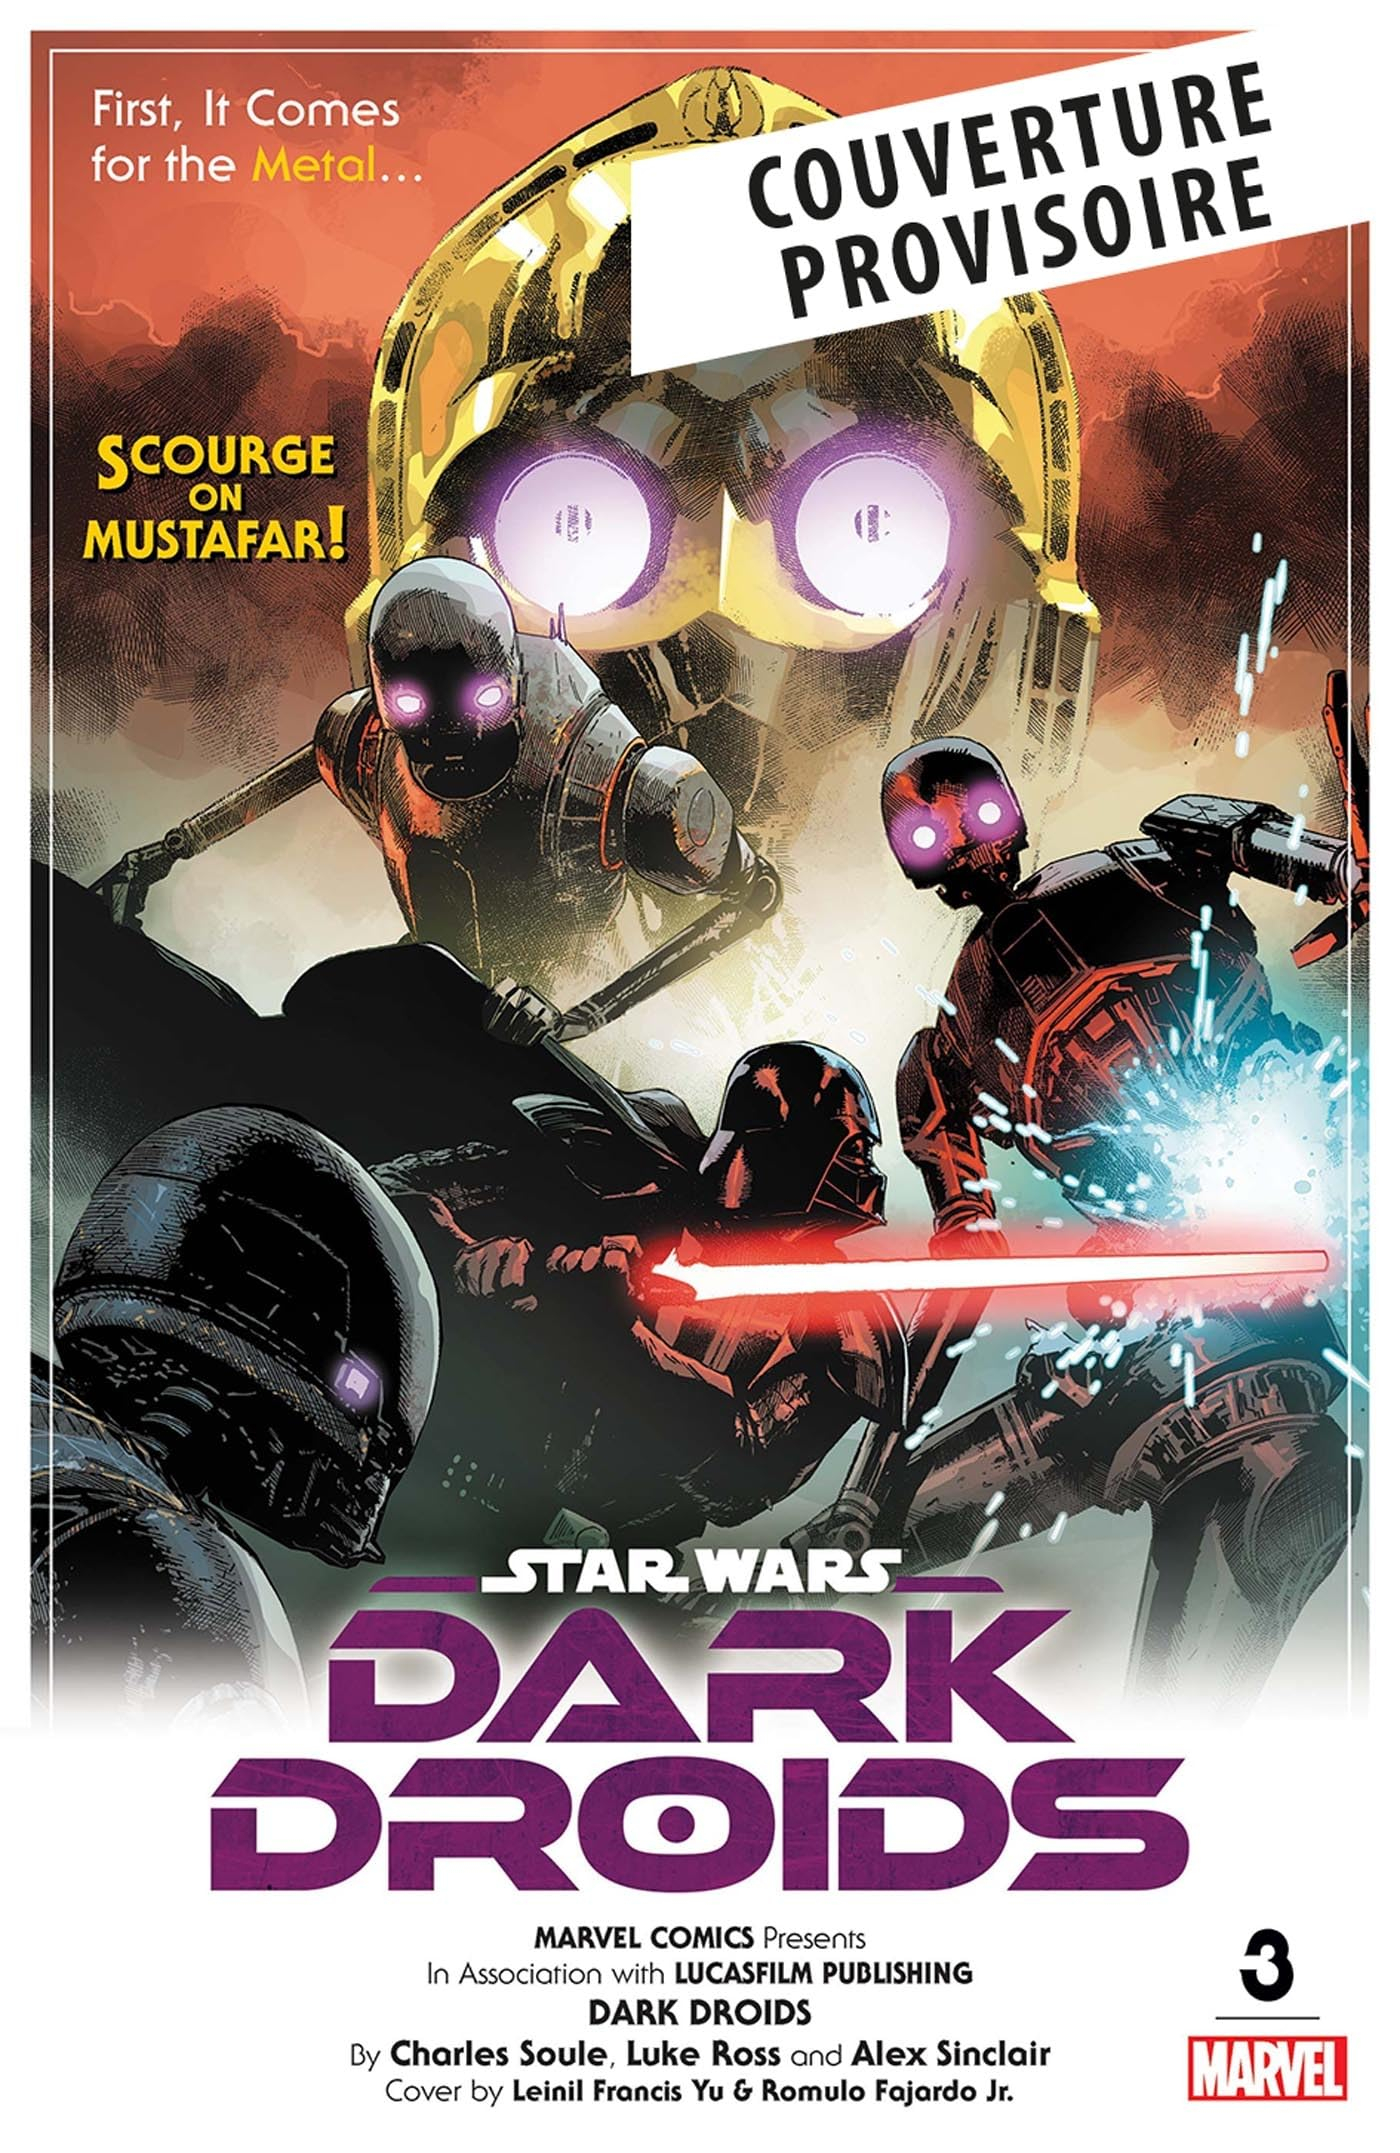 Star Wars : Dark Droids. Vol. 2. Executor extirpatus